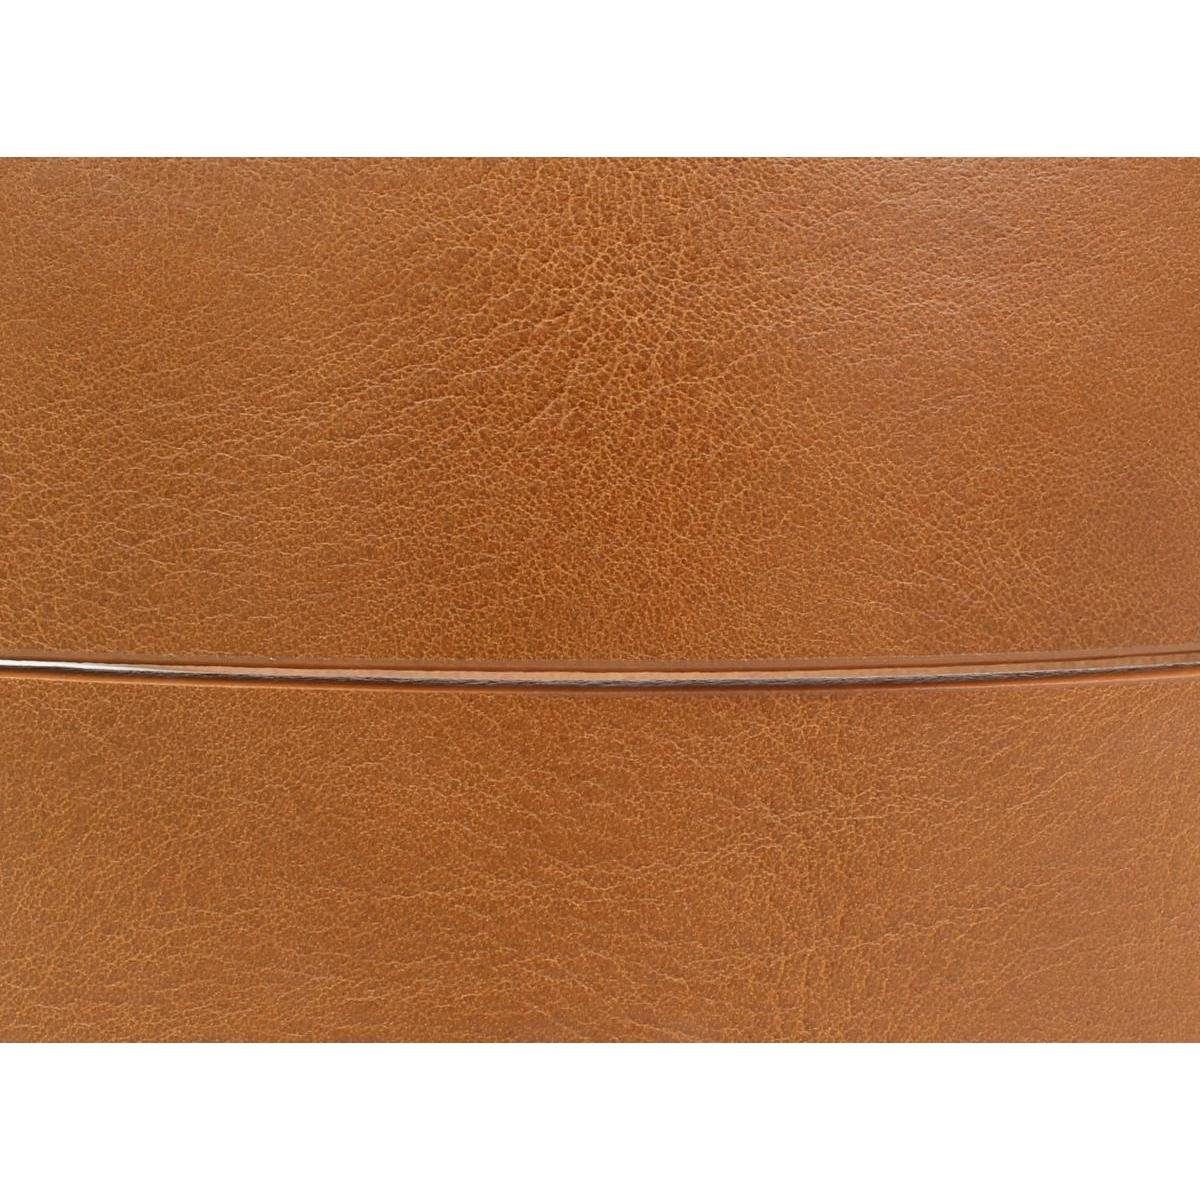 BELTINGER Leder-Gürtel Ledergürtel Jeans-Gürtel für aus cm He Schwarz, 4 Hochwertiger Vollrindleder Silber -